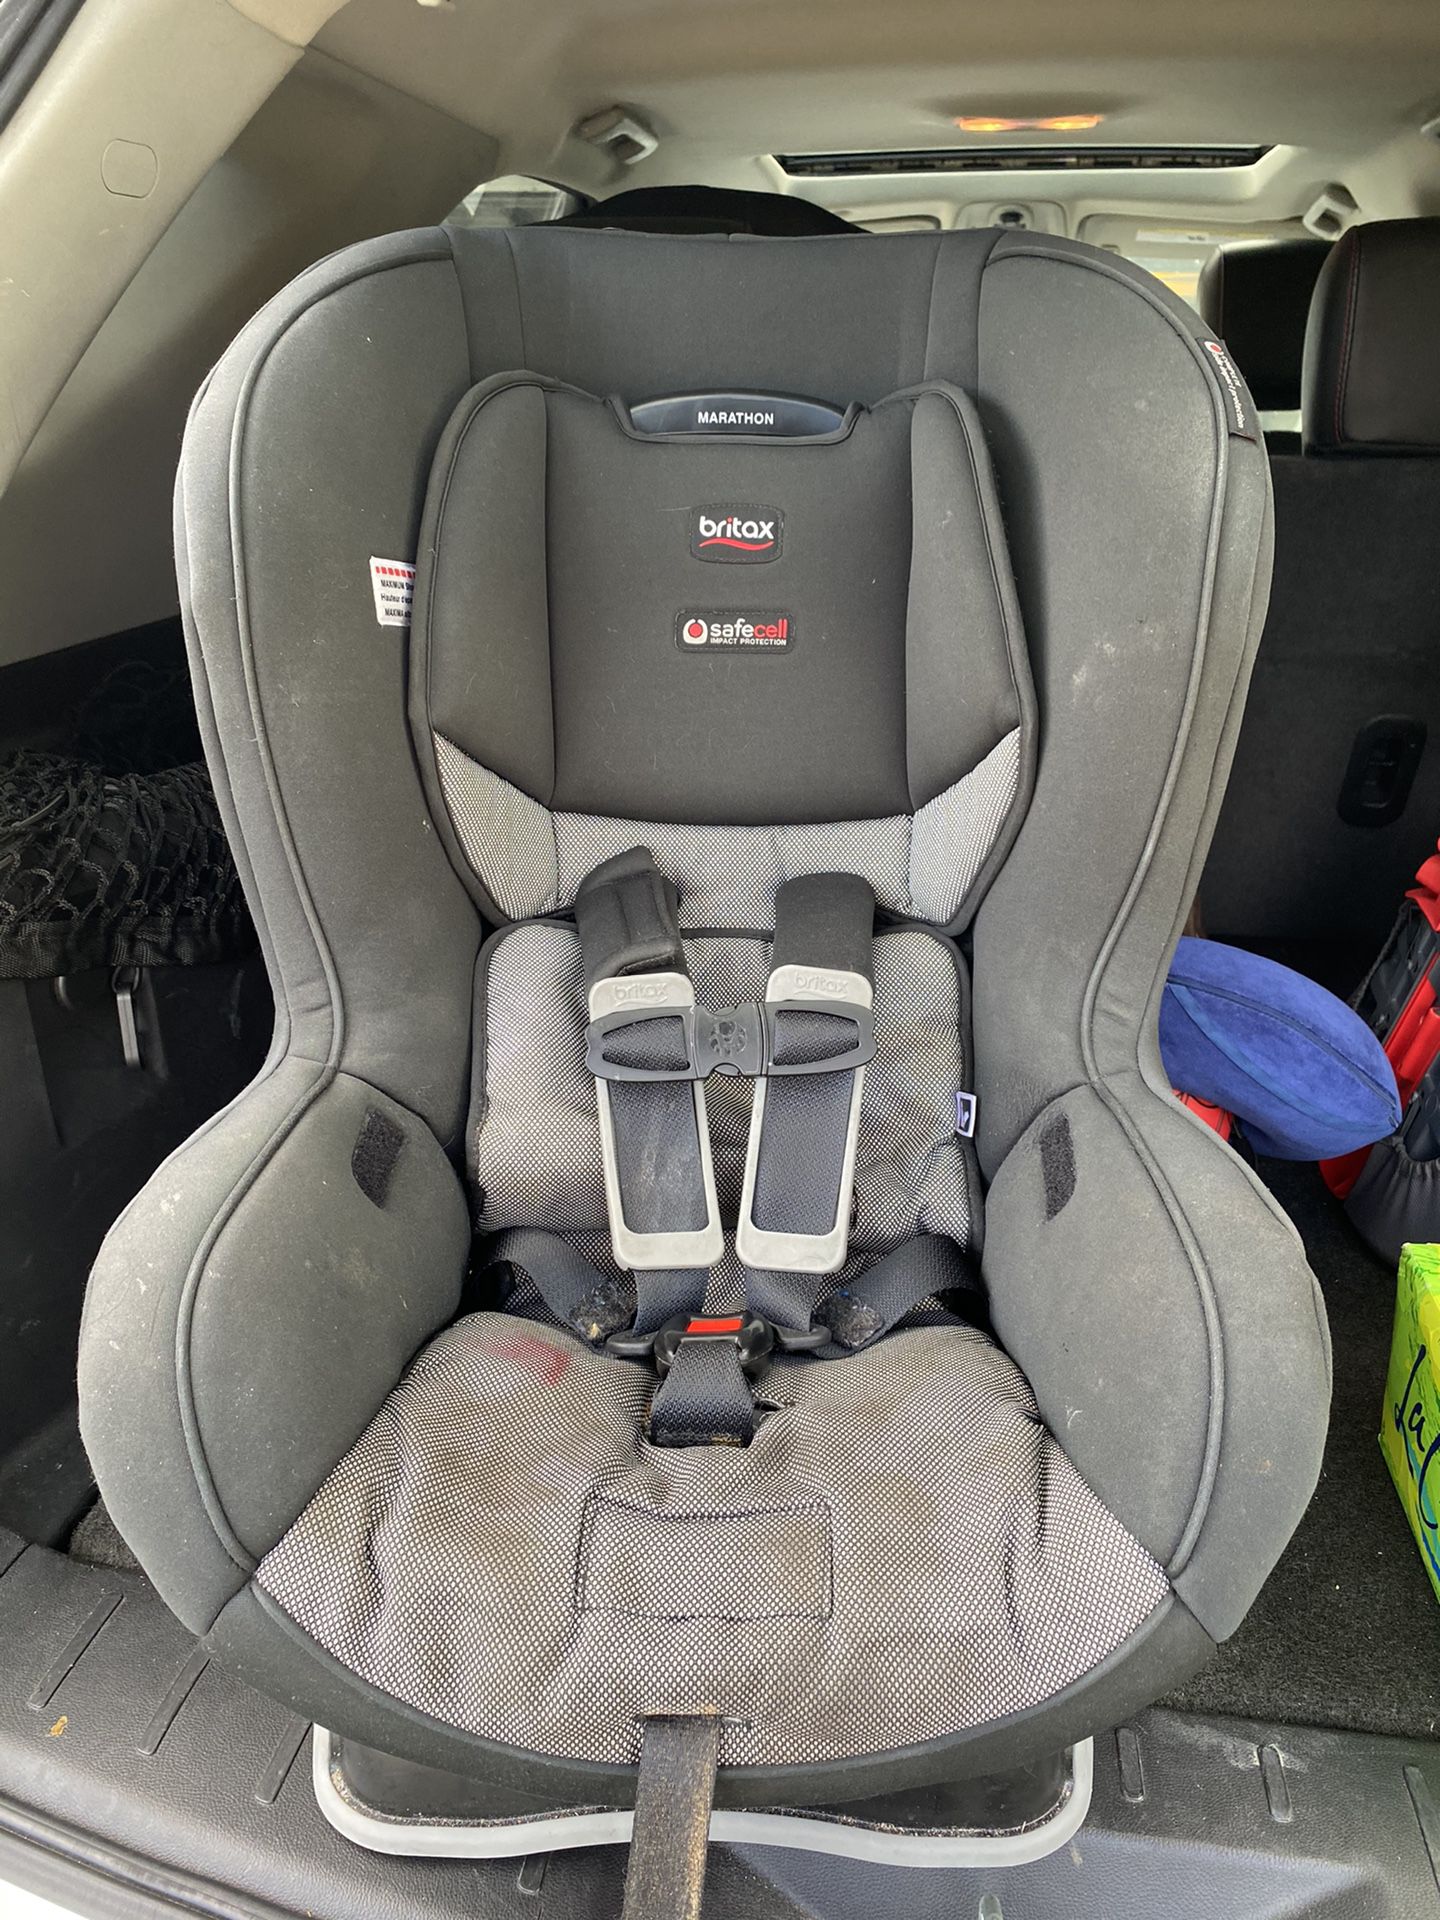 Britax Marathon convertible infant/toddler car seat used $50 OBO